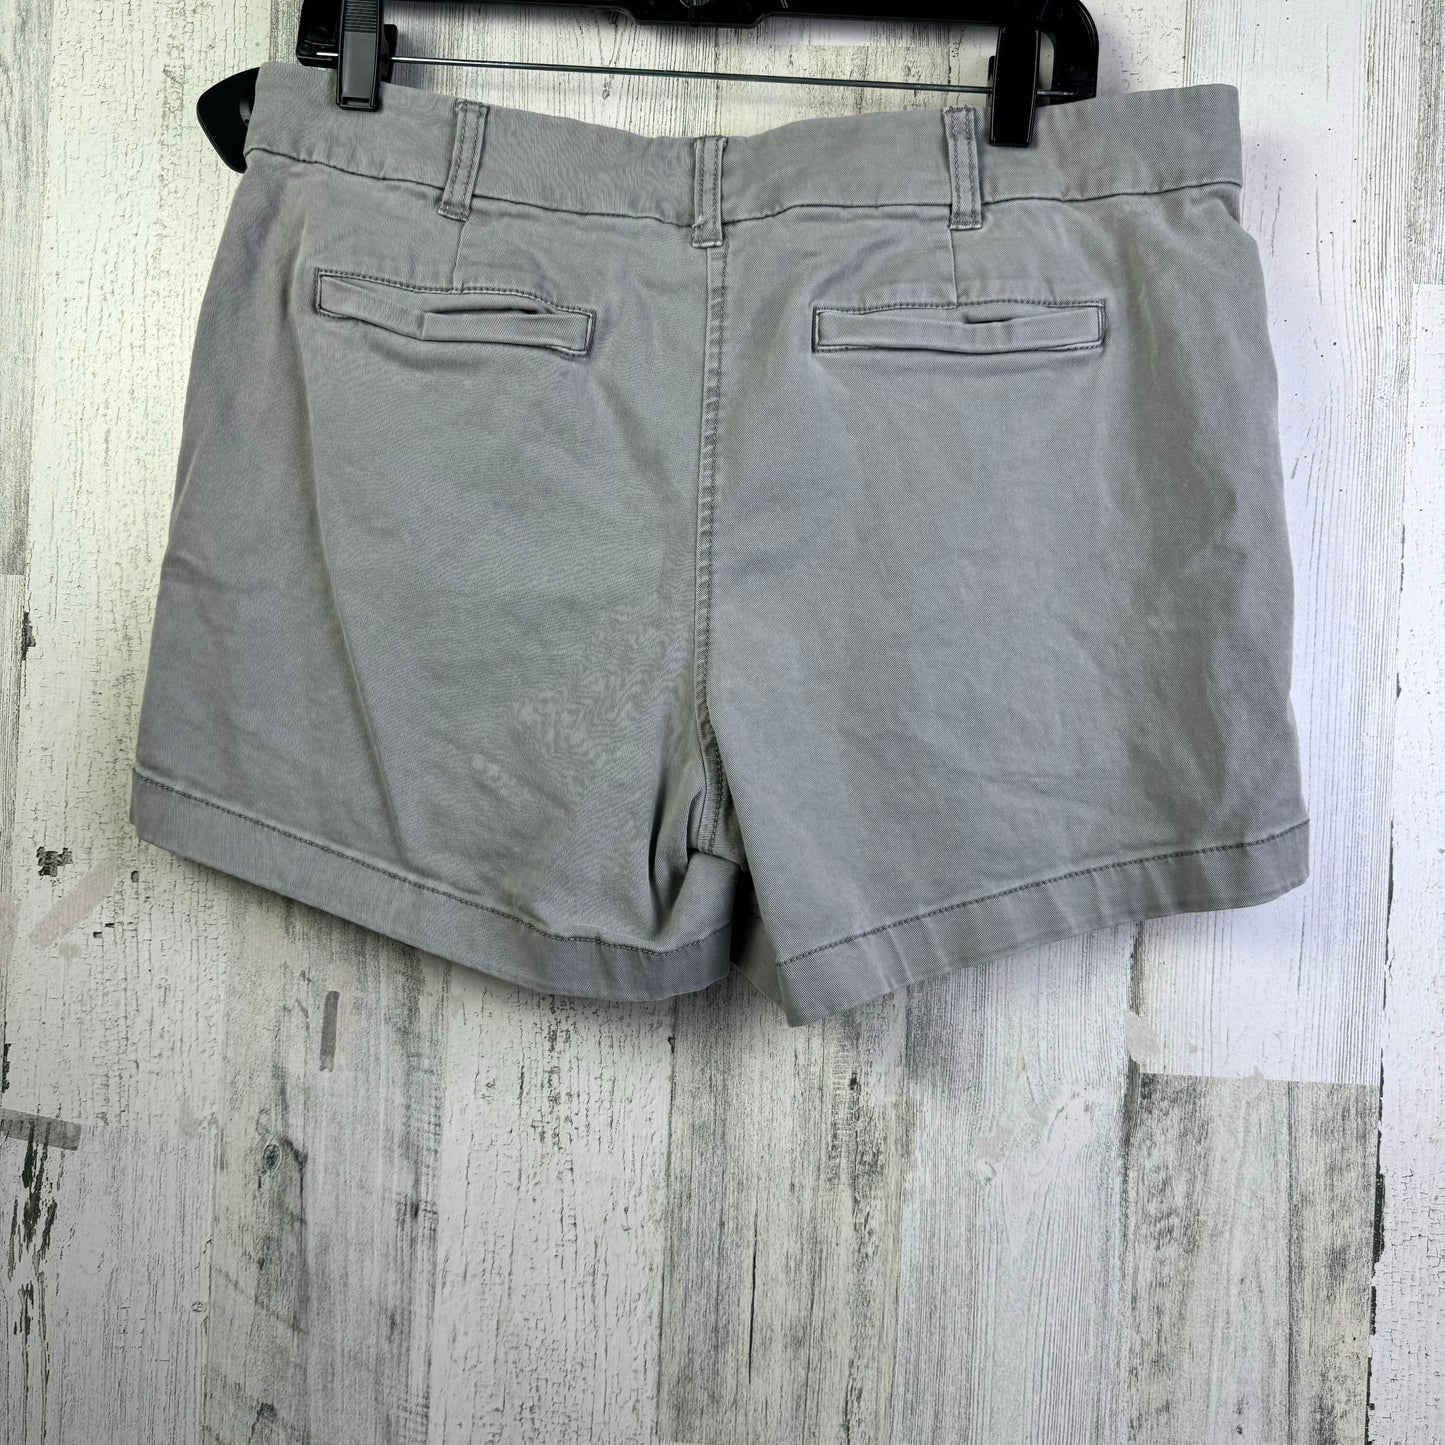 Grey Shorts J. Crew, Size 12